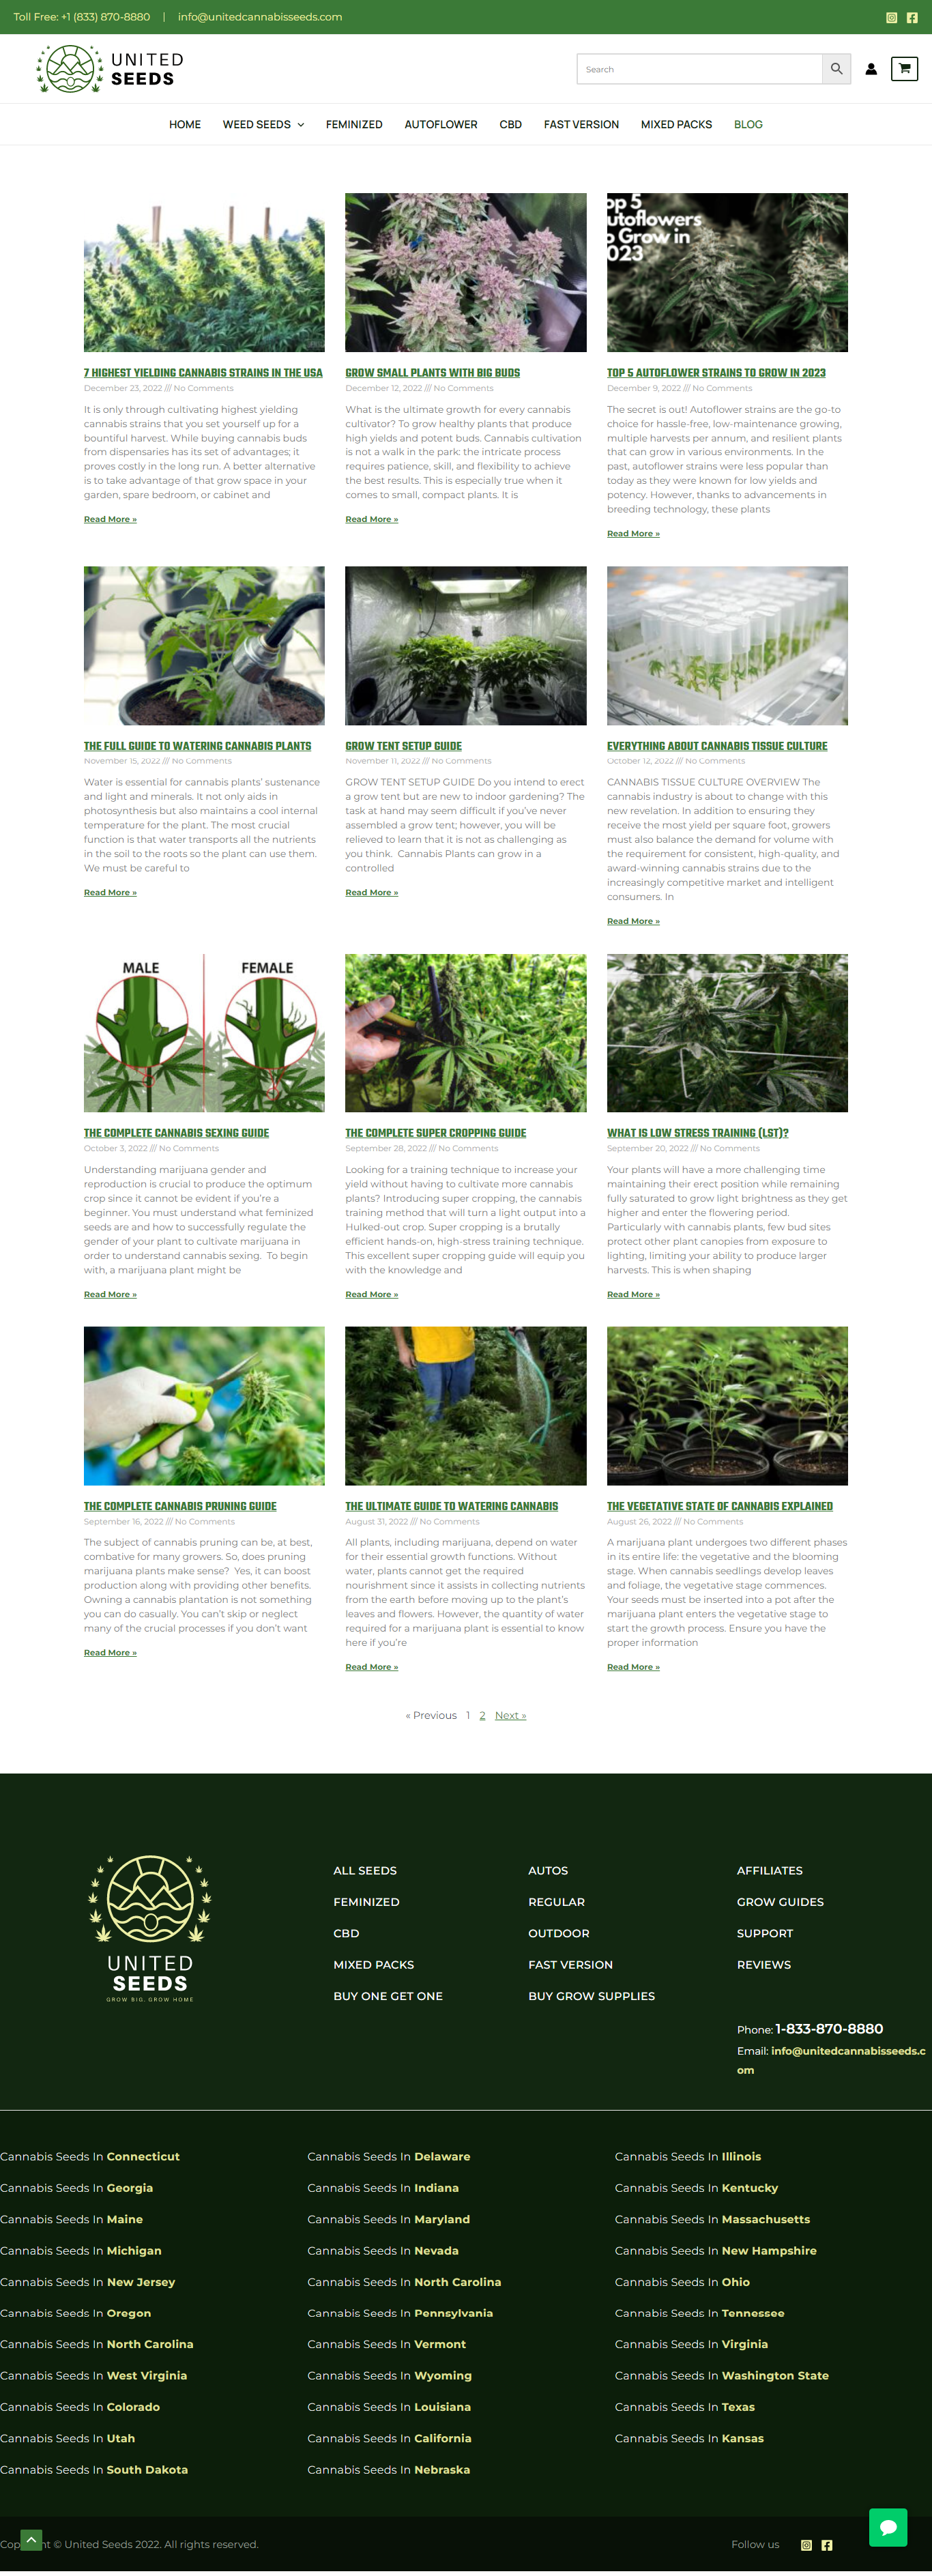 United Cannabis Seeds